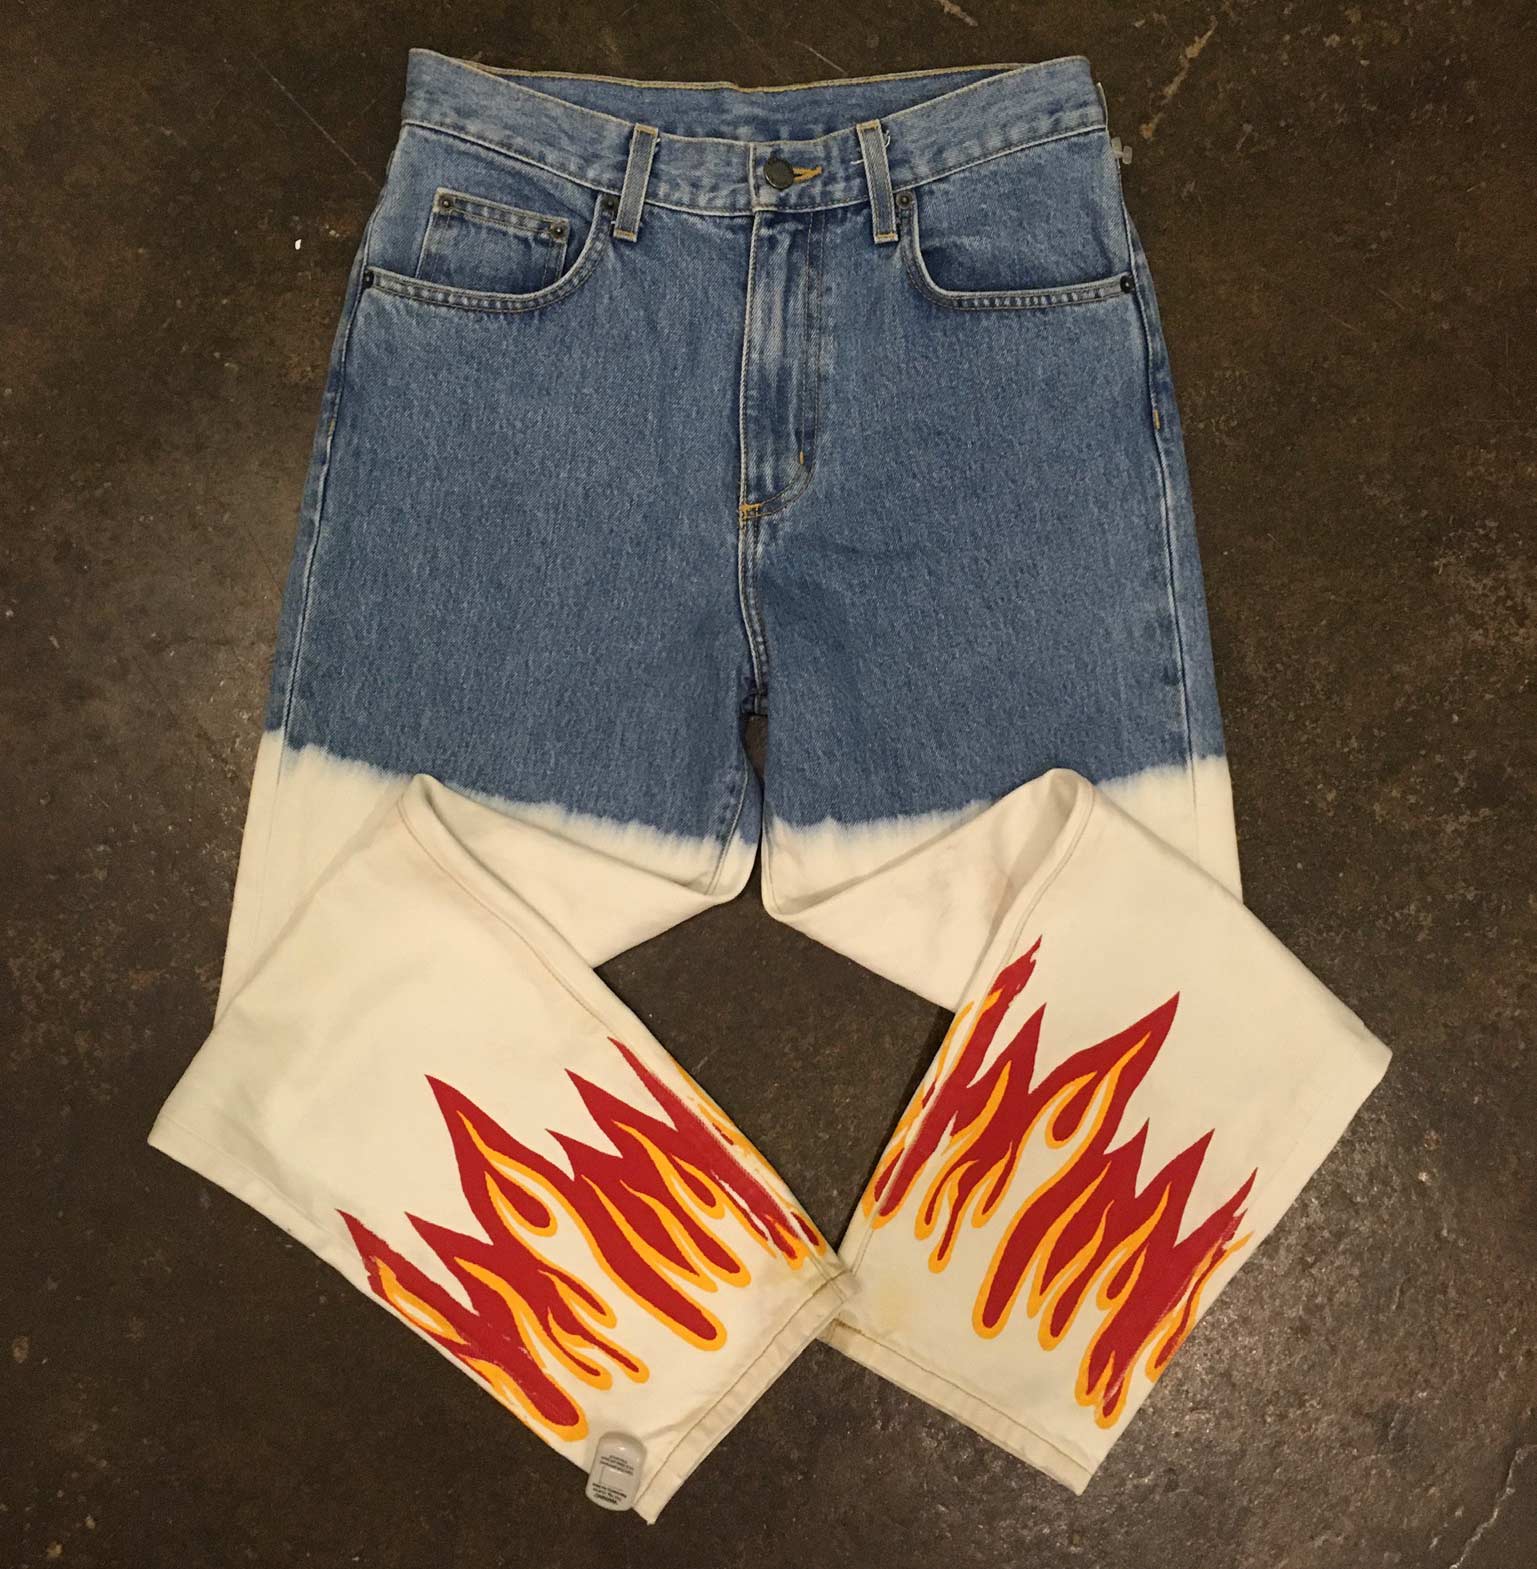 Dip bleached flame Carmar jeans at Dallas